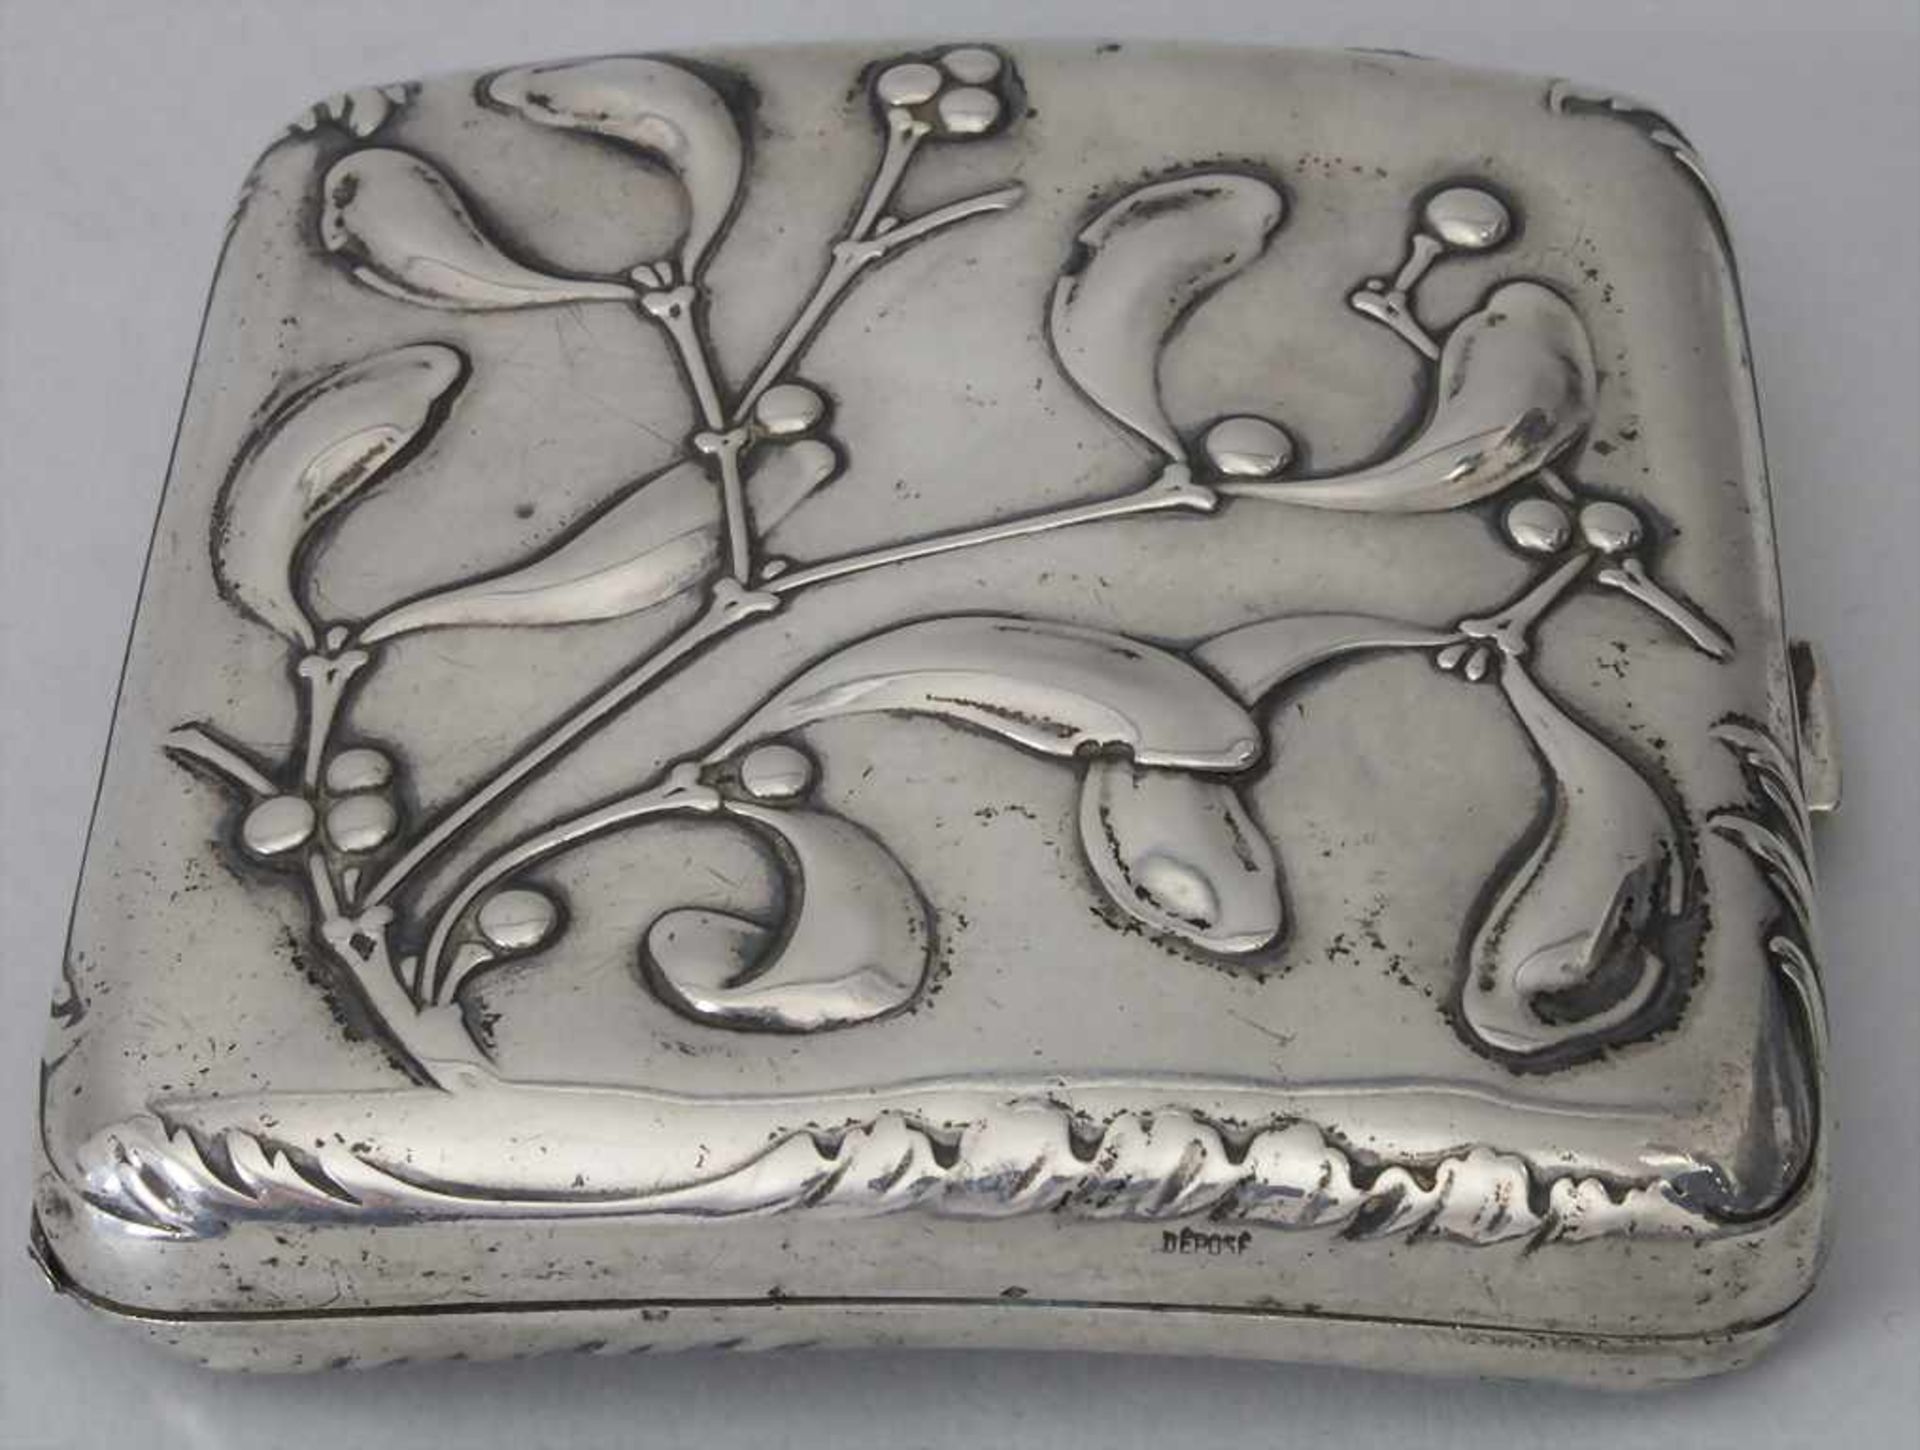 Jugendstil Zigarettenetui mit Mistelzweigen / An Art Nouveau silver cigarette case with mistleto